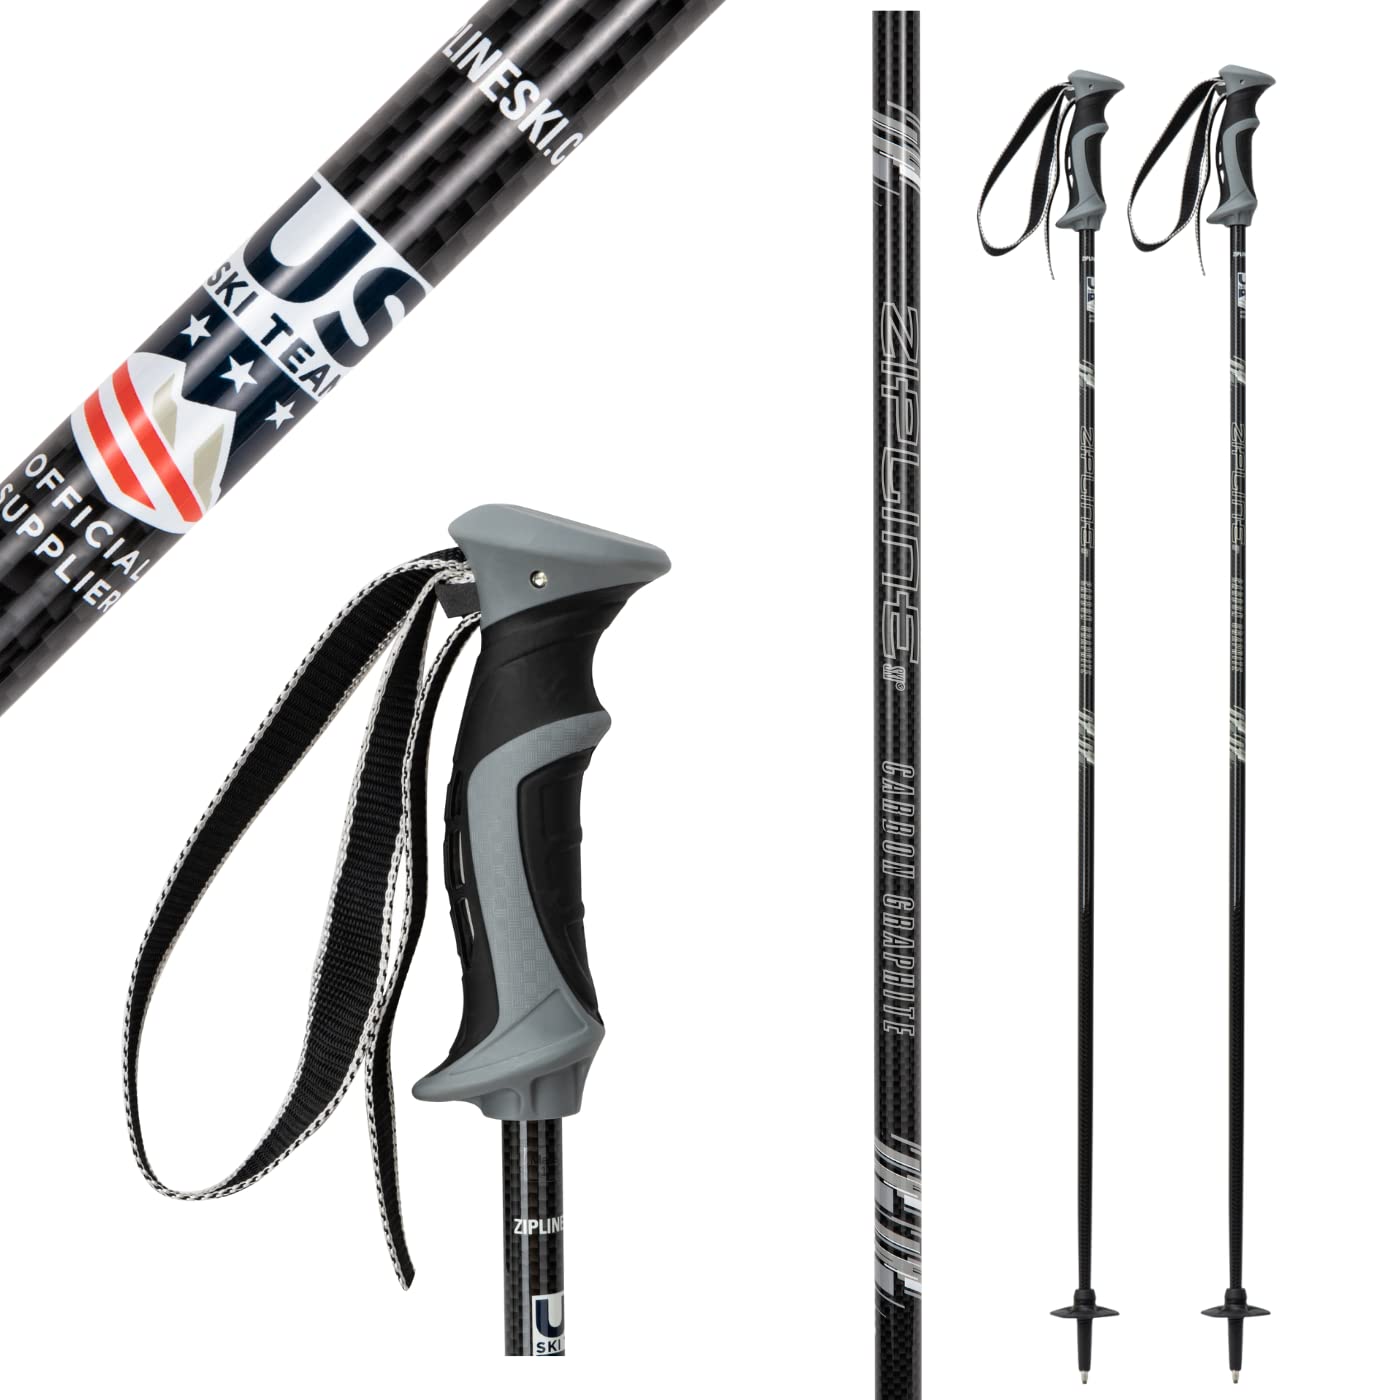 Zipline Ski Ski Poles Graphite Carbon Composite - Zipline Lollipop Us Ski Team Official Supplier (Black Carbon Weave, 54 In137 Cm)